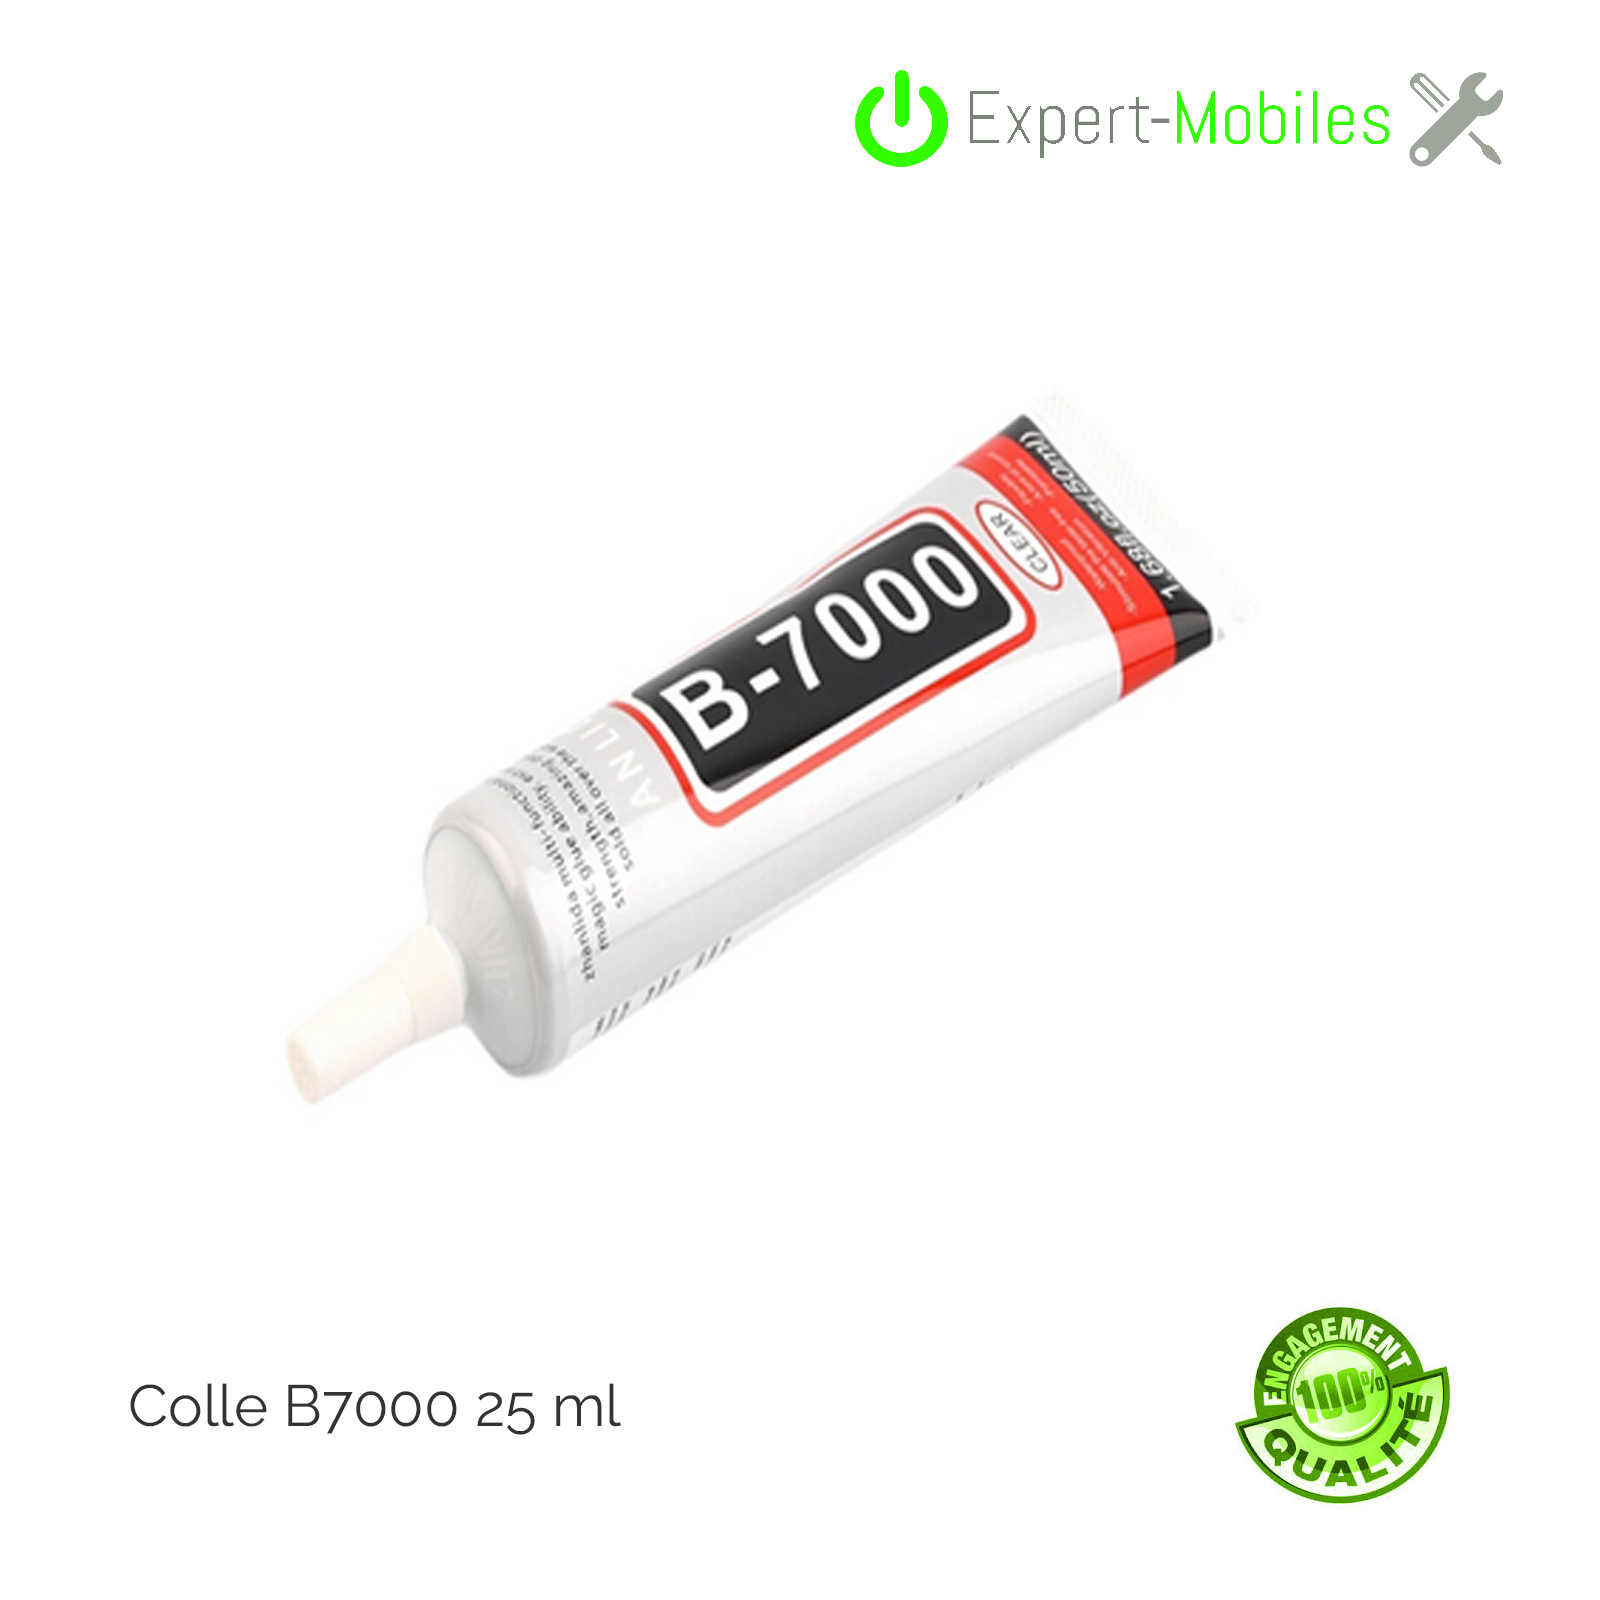 Colle B7000 25 ml - Expert-Mobiles